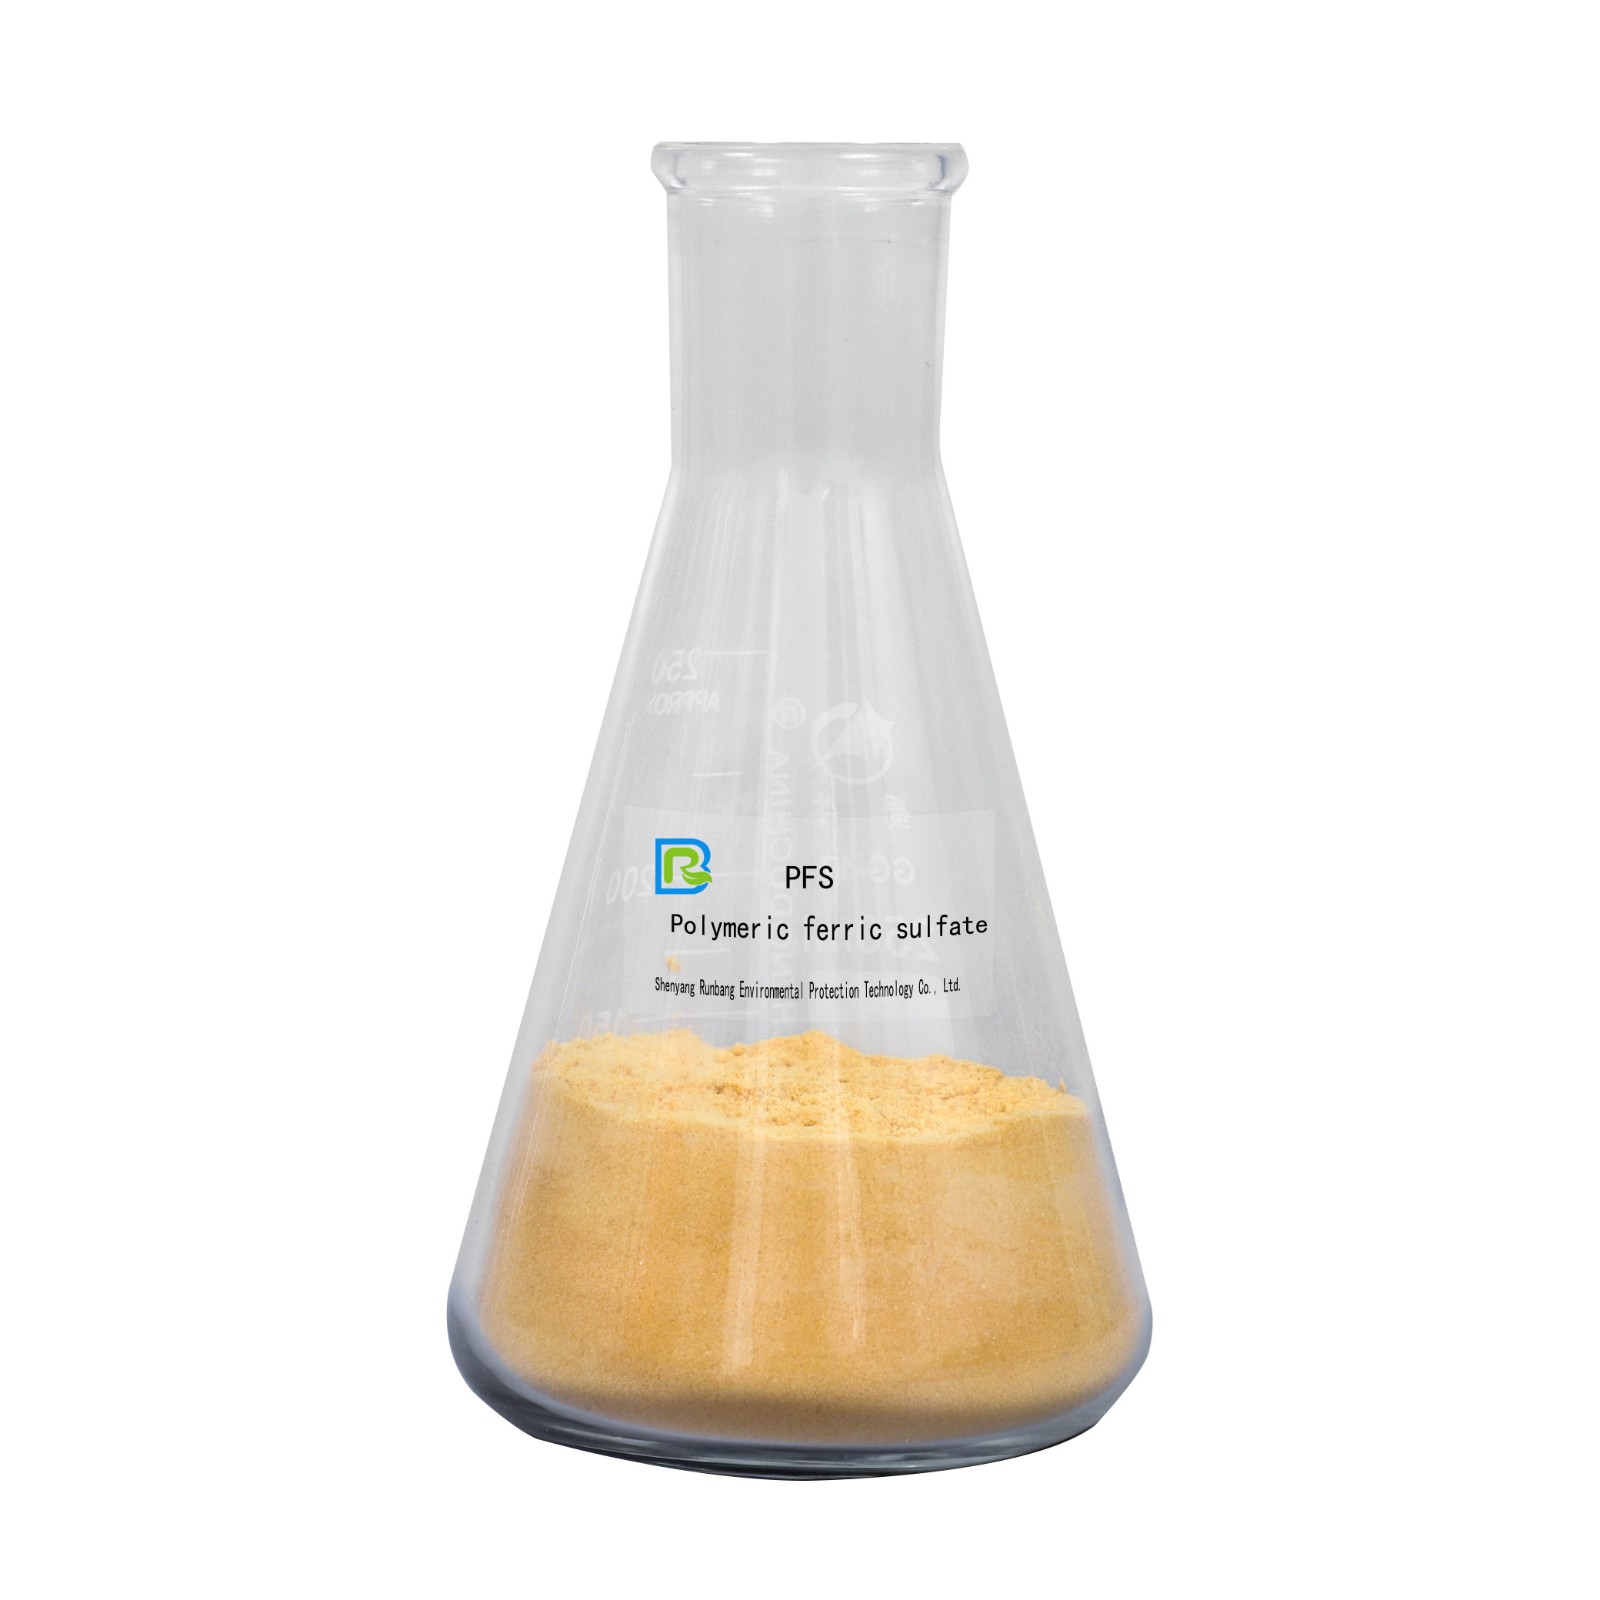 Polymerized ferric sulfate